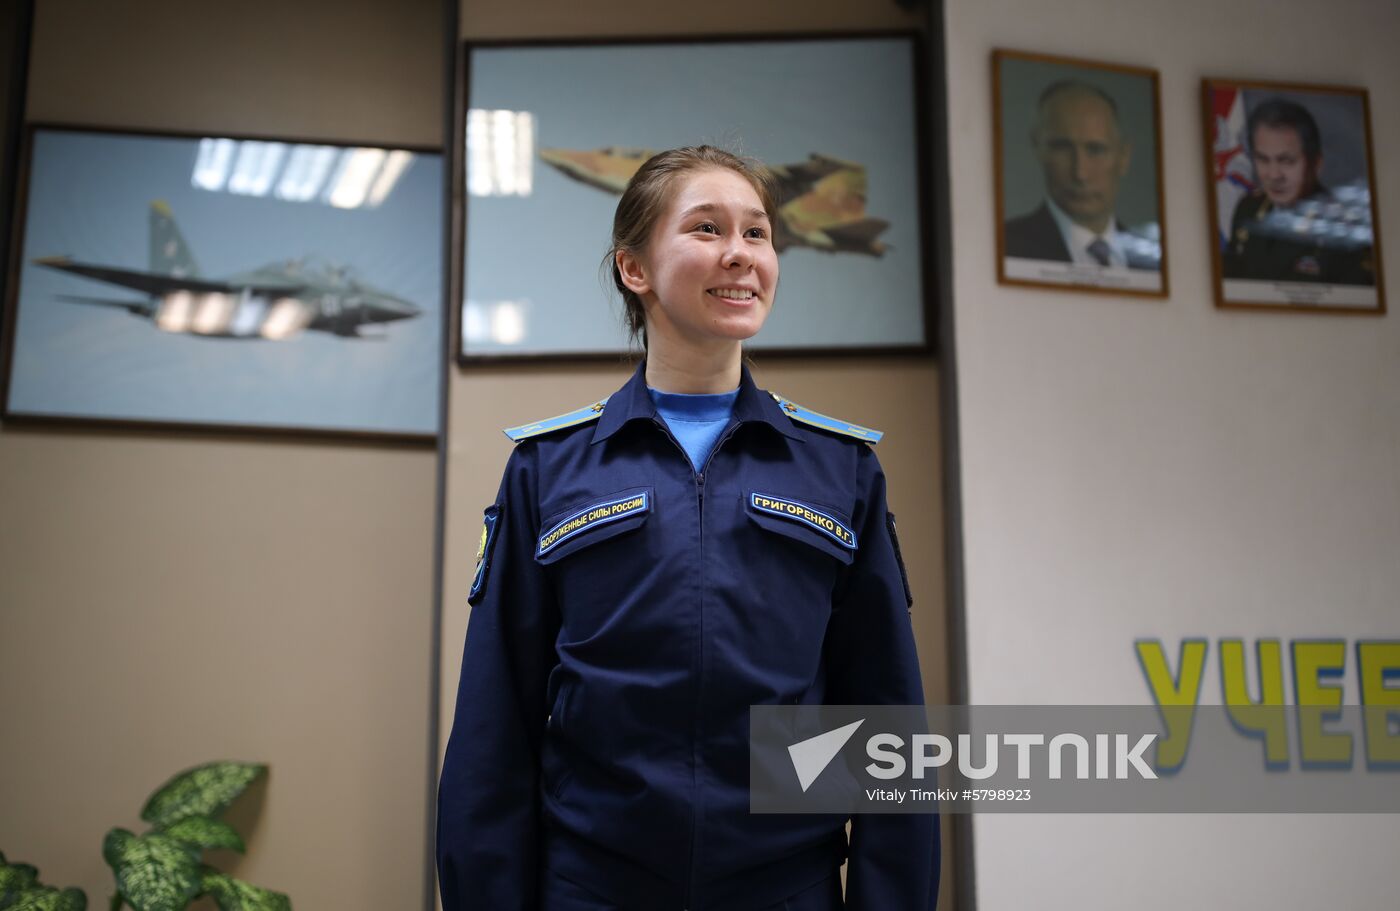 Russia Army Female Pilots